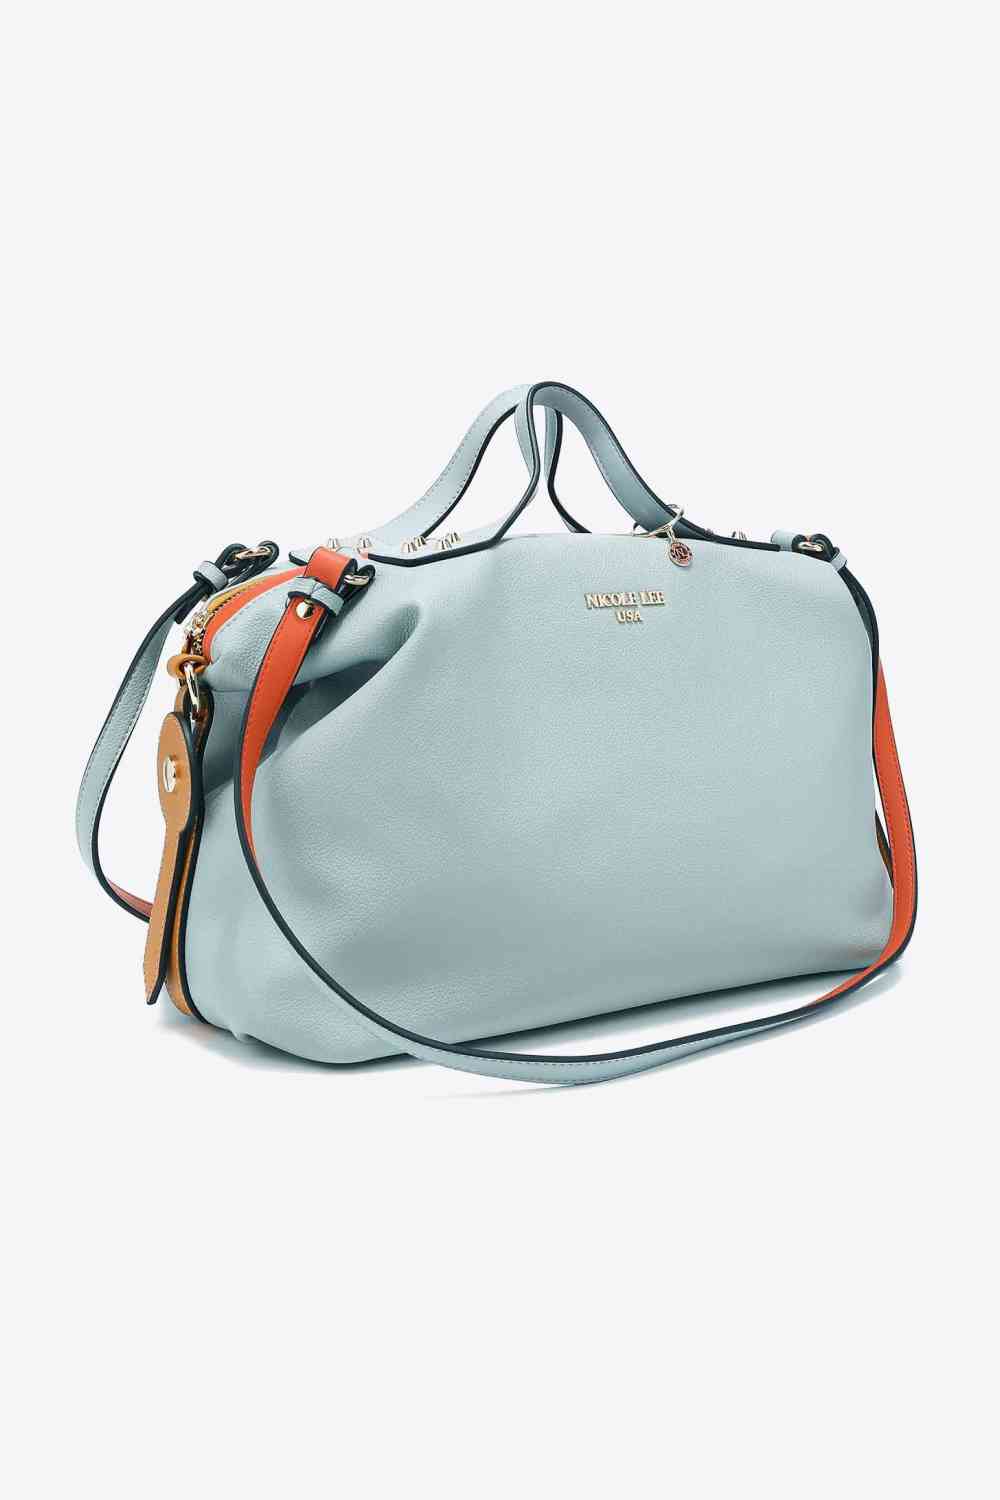 Nicole Lee USA Avery Multi Strap Boston Bag Soft Blue One Size